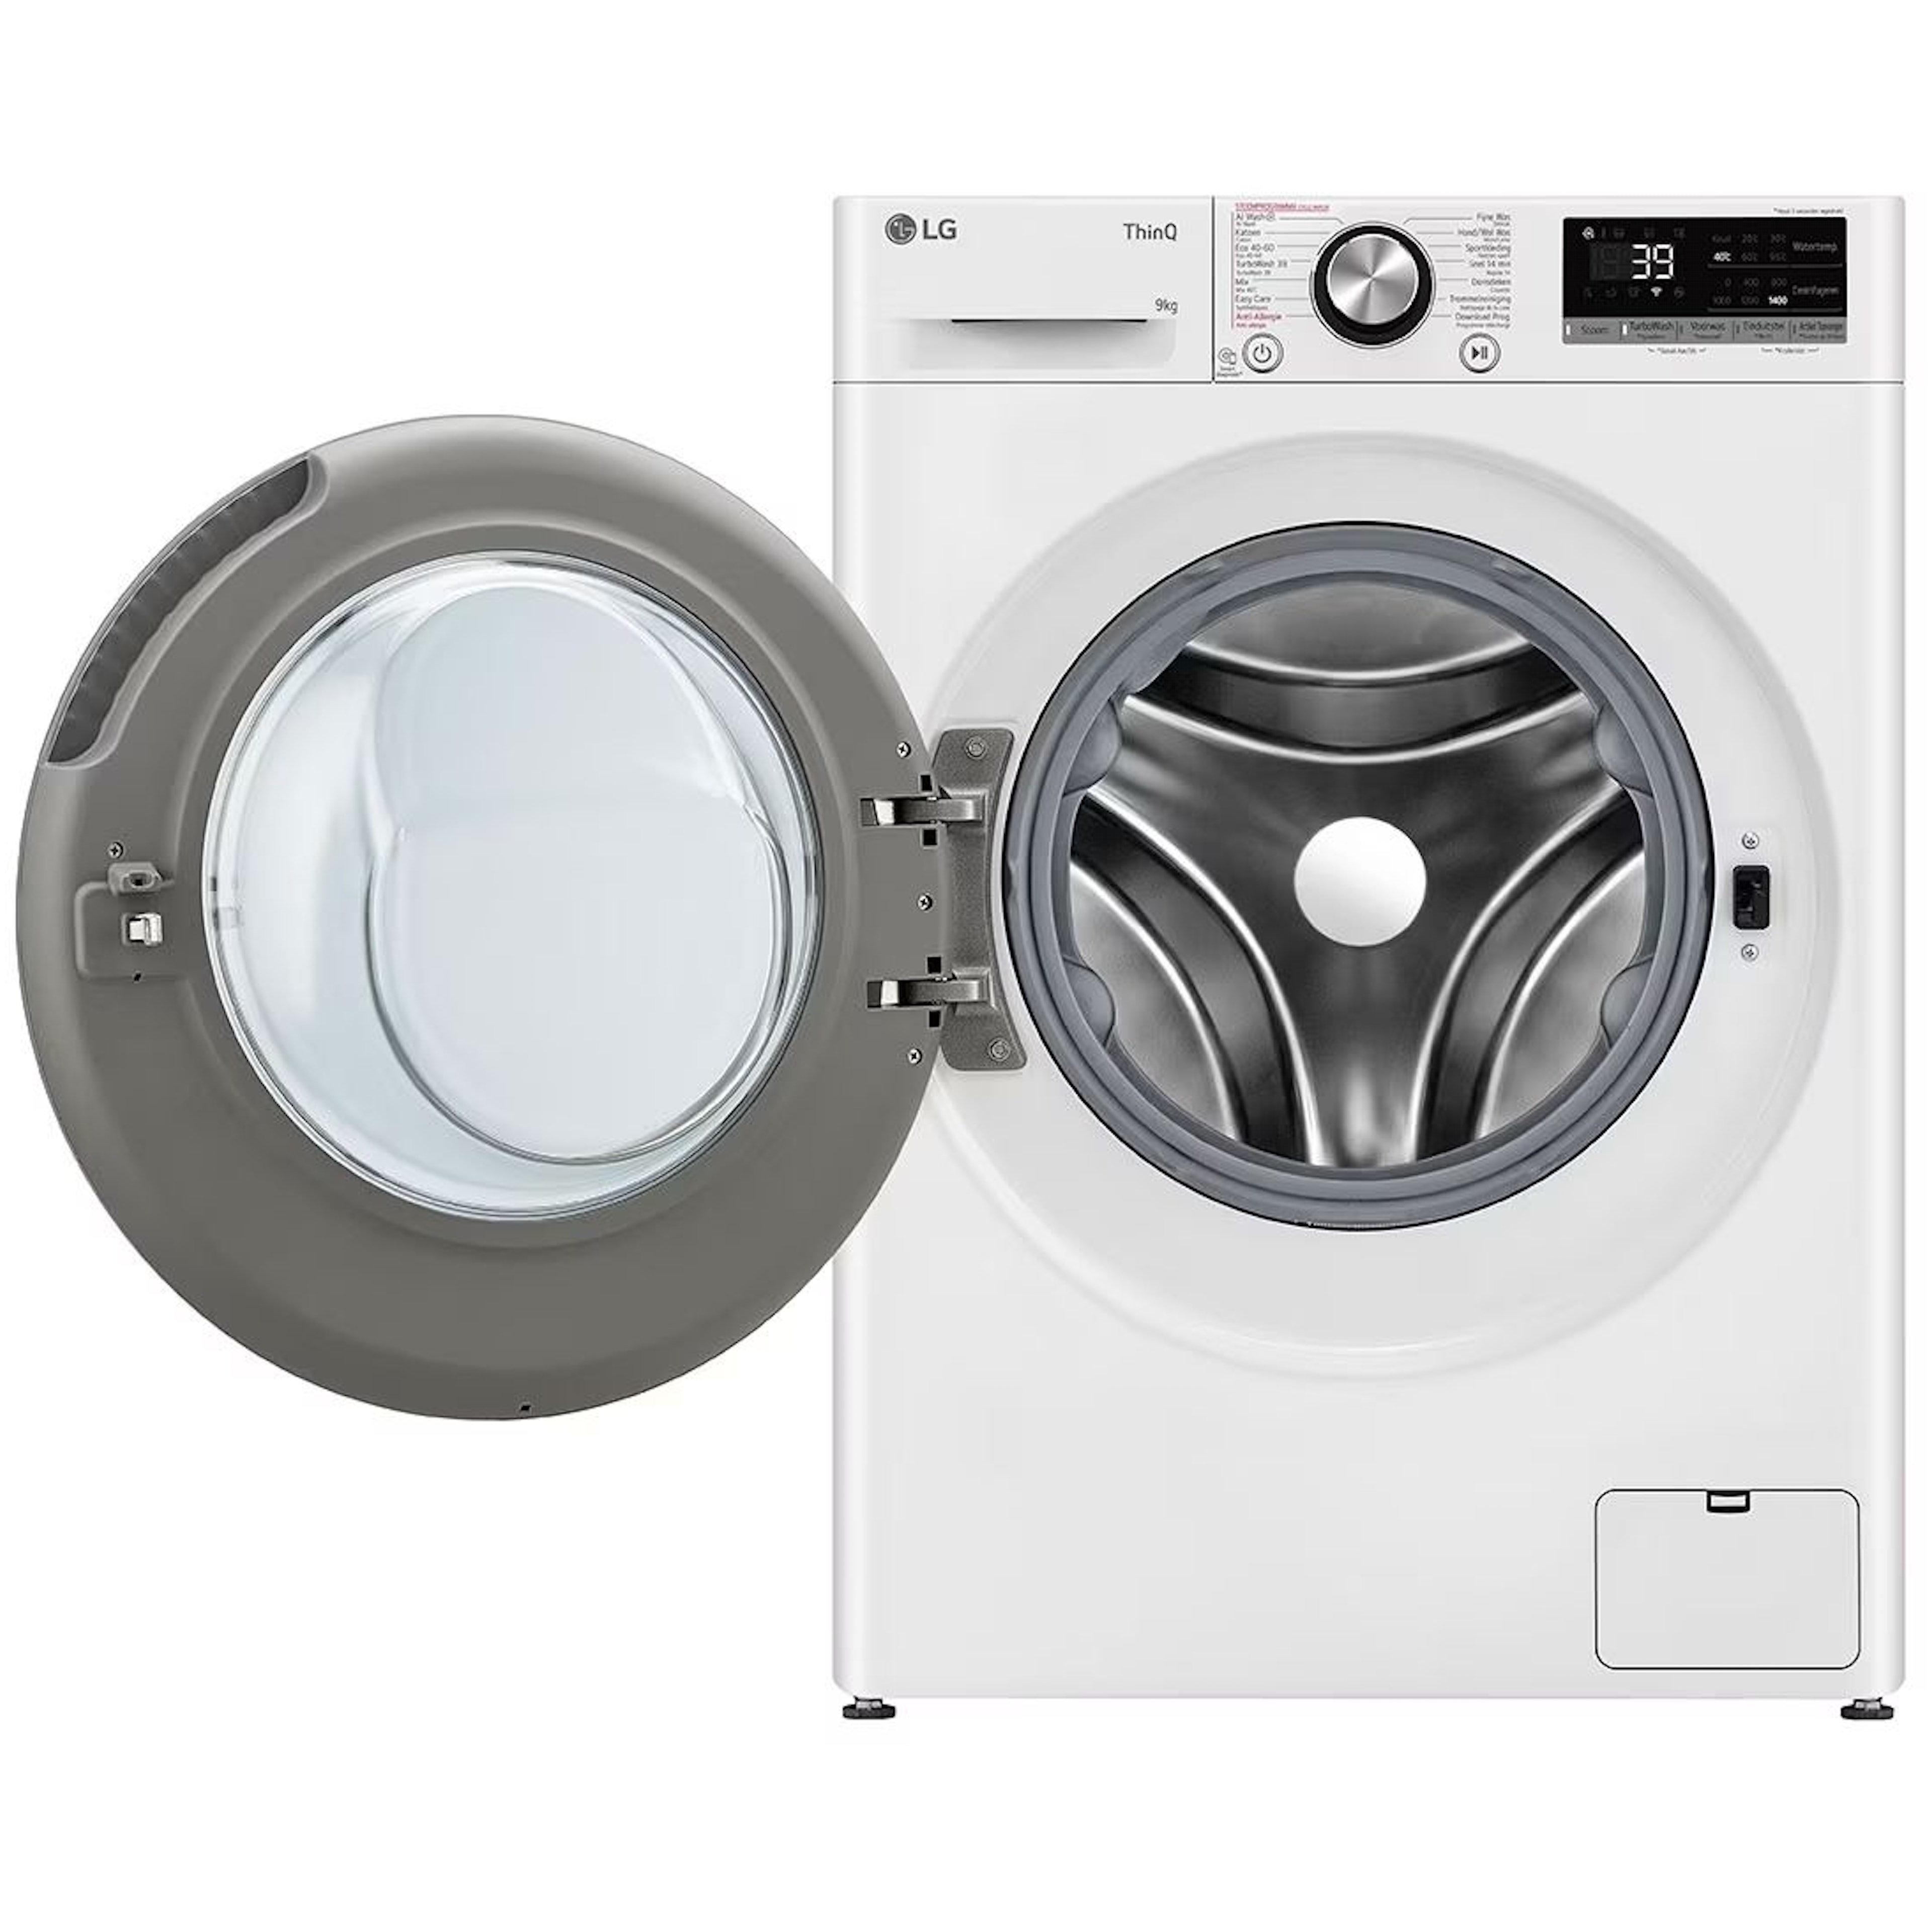 LG wasmachine  F4WR7009S2W afbeelding 4